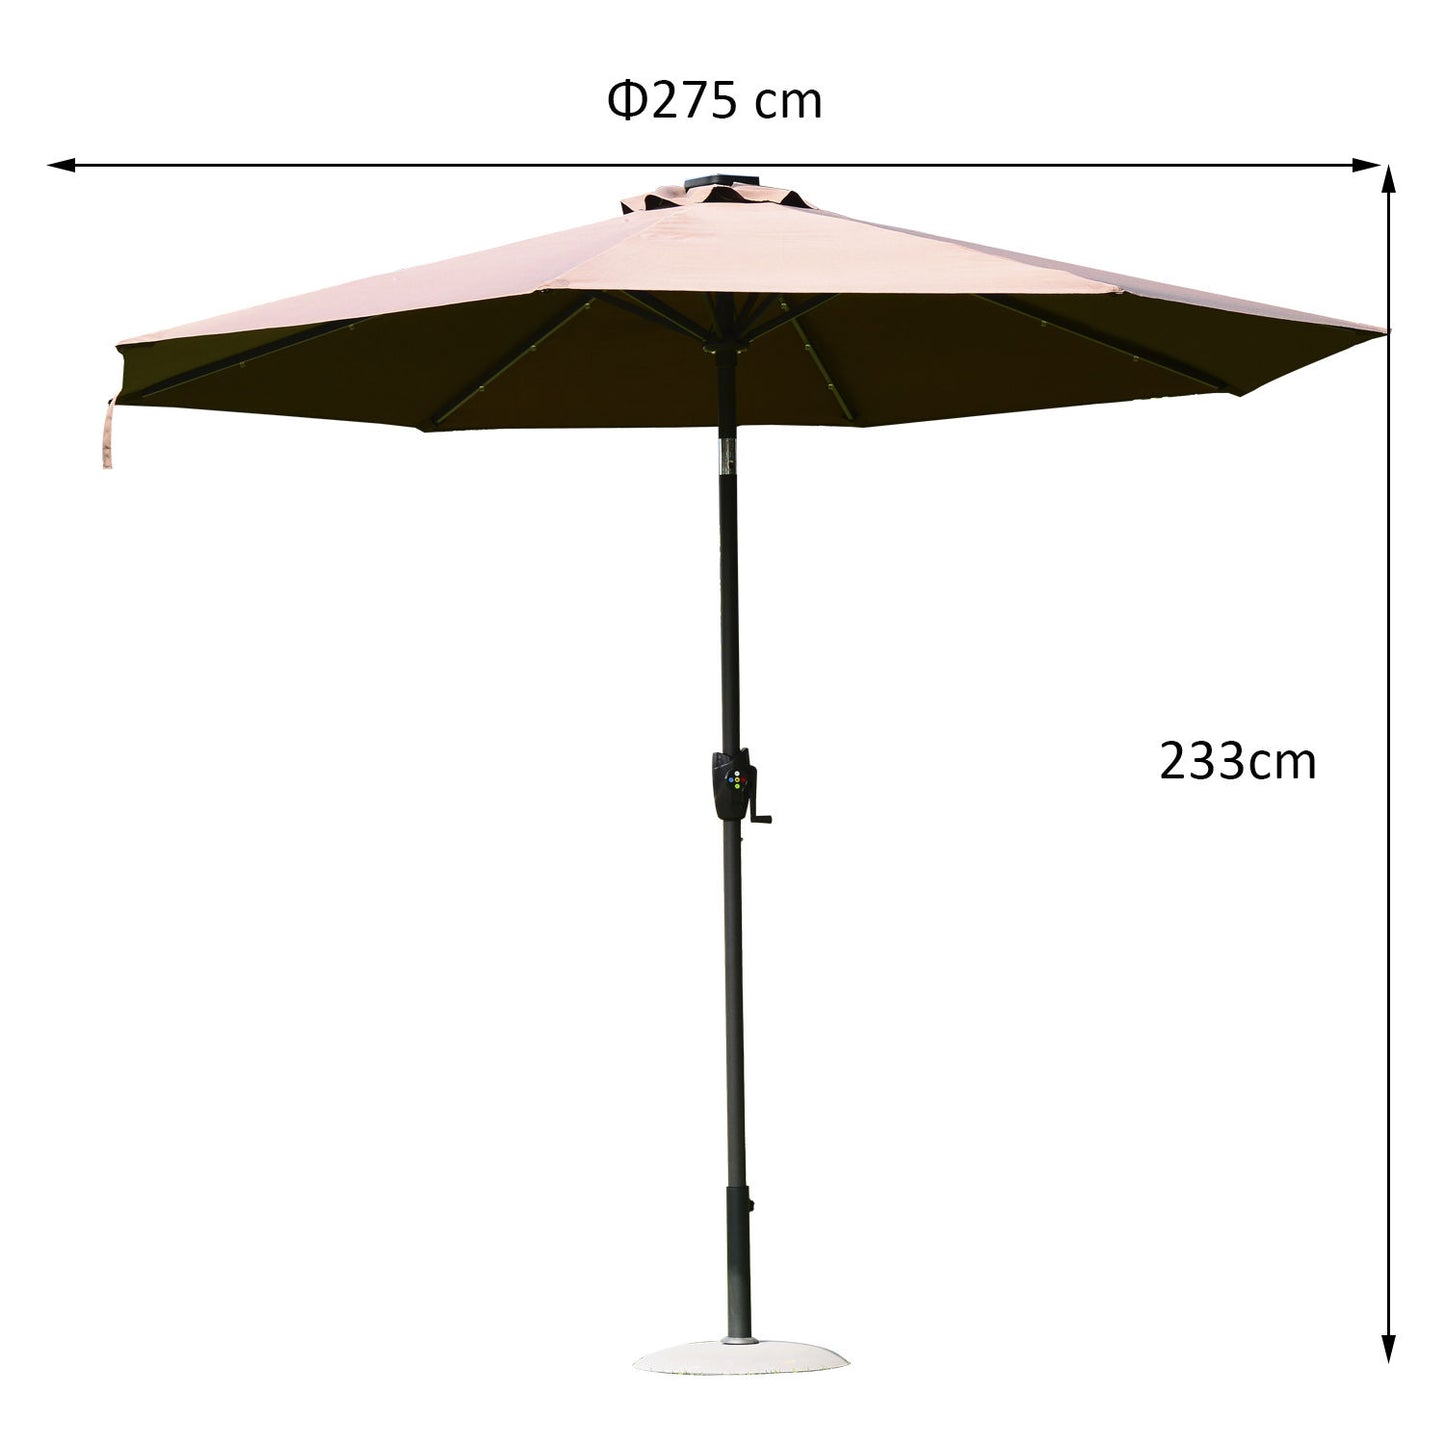 Outsunny Umbrella Parasol 24 Solar LED Light Outdoor Tilt Sun Patio Club Party Event Manual Shade w/Hand Crank-Brown/Coffee